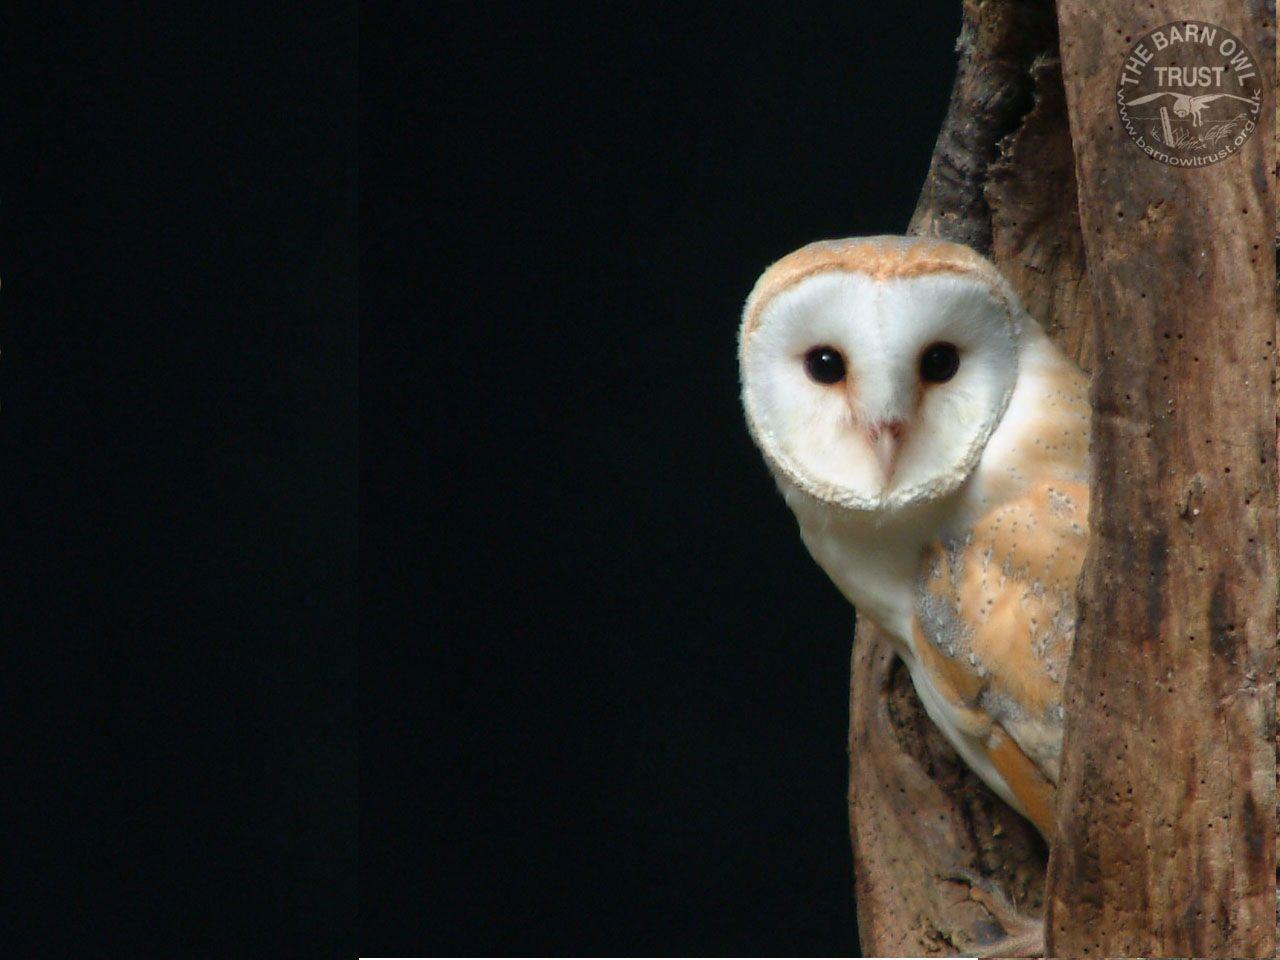 The Barn Owl Trust Background Photo